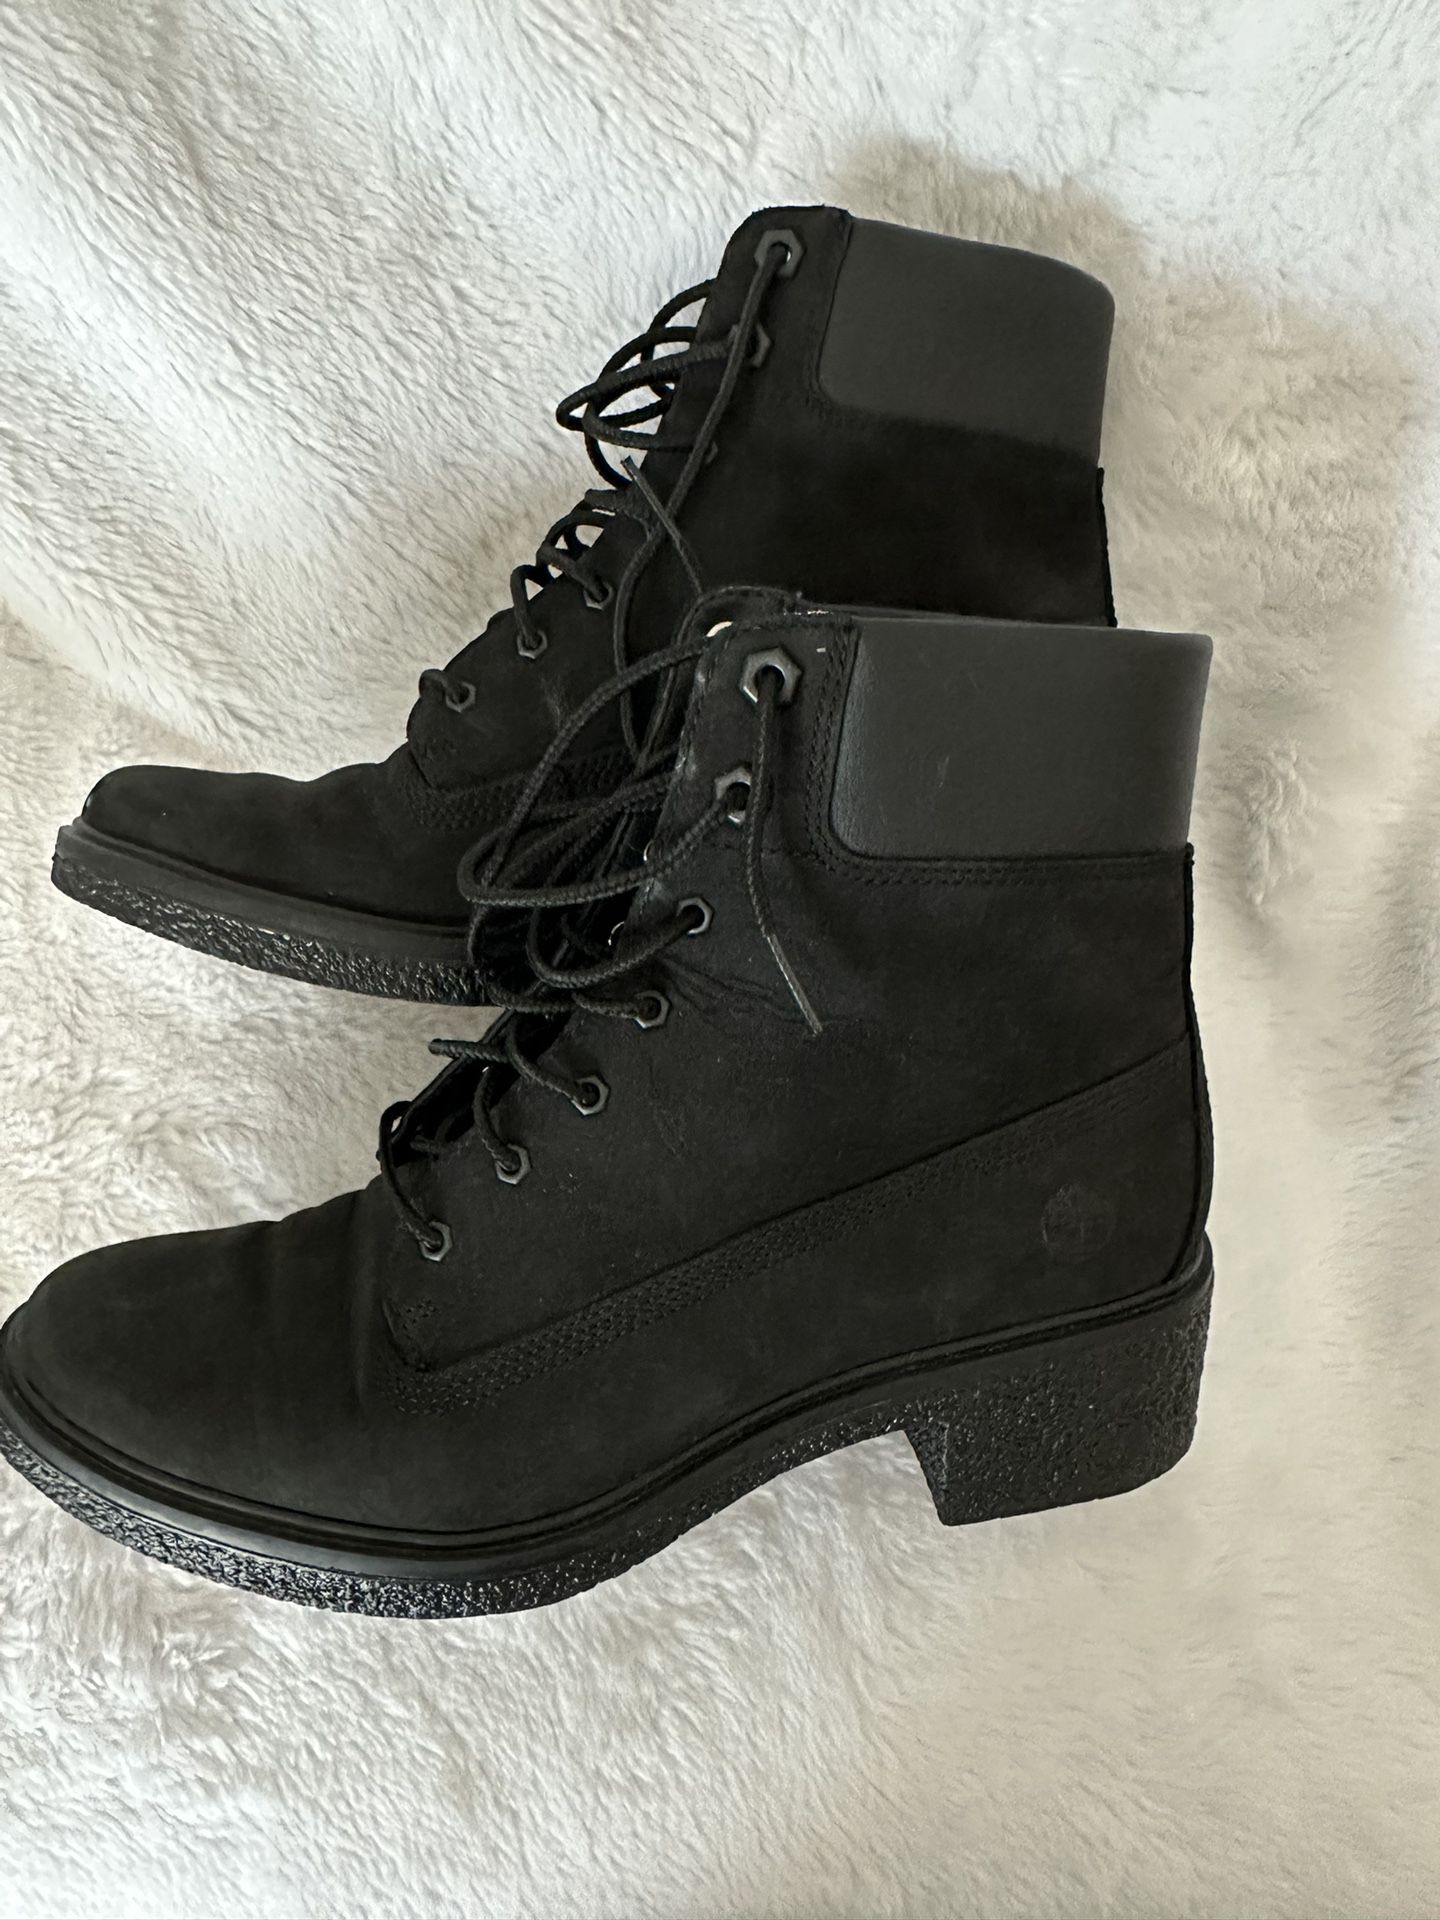 Timberland Boots Women’s Size 7